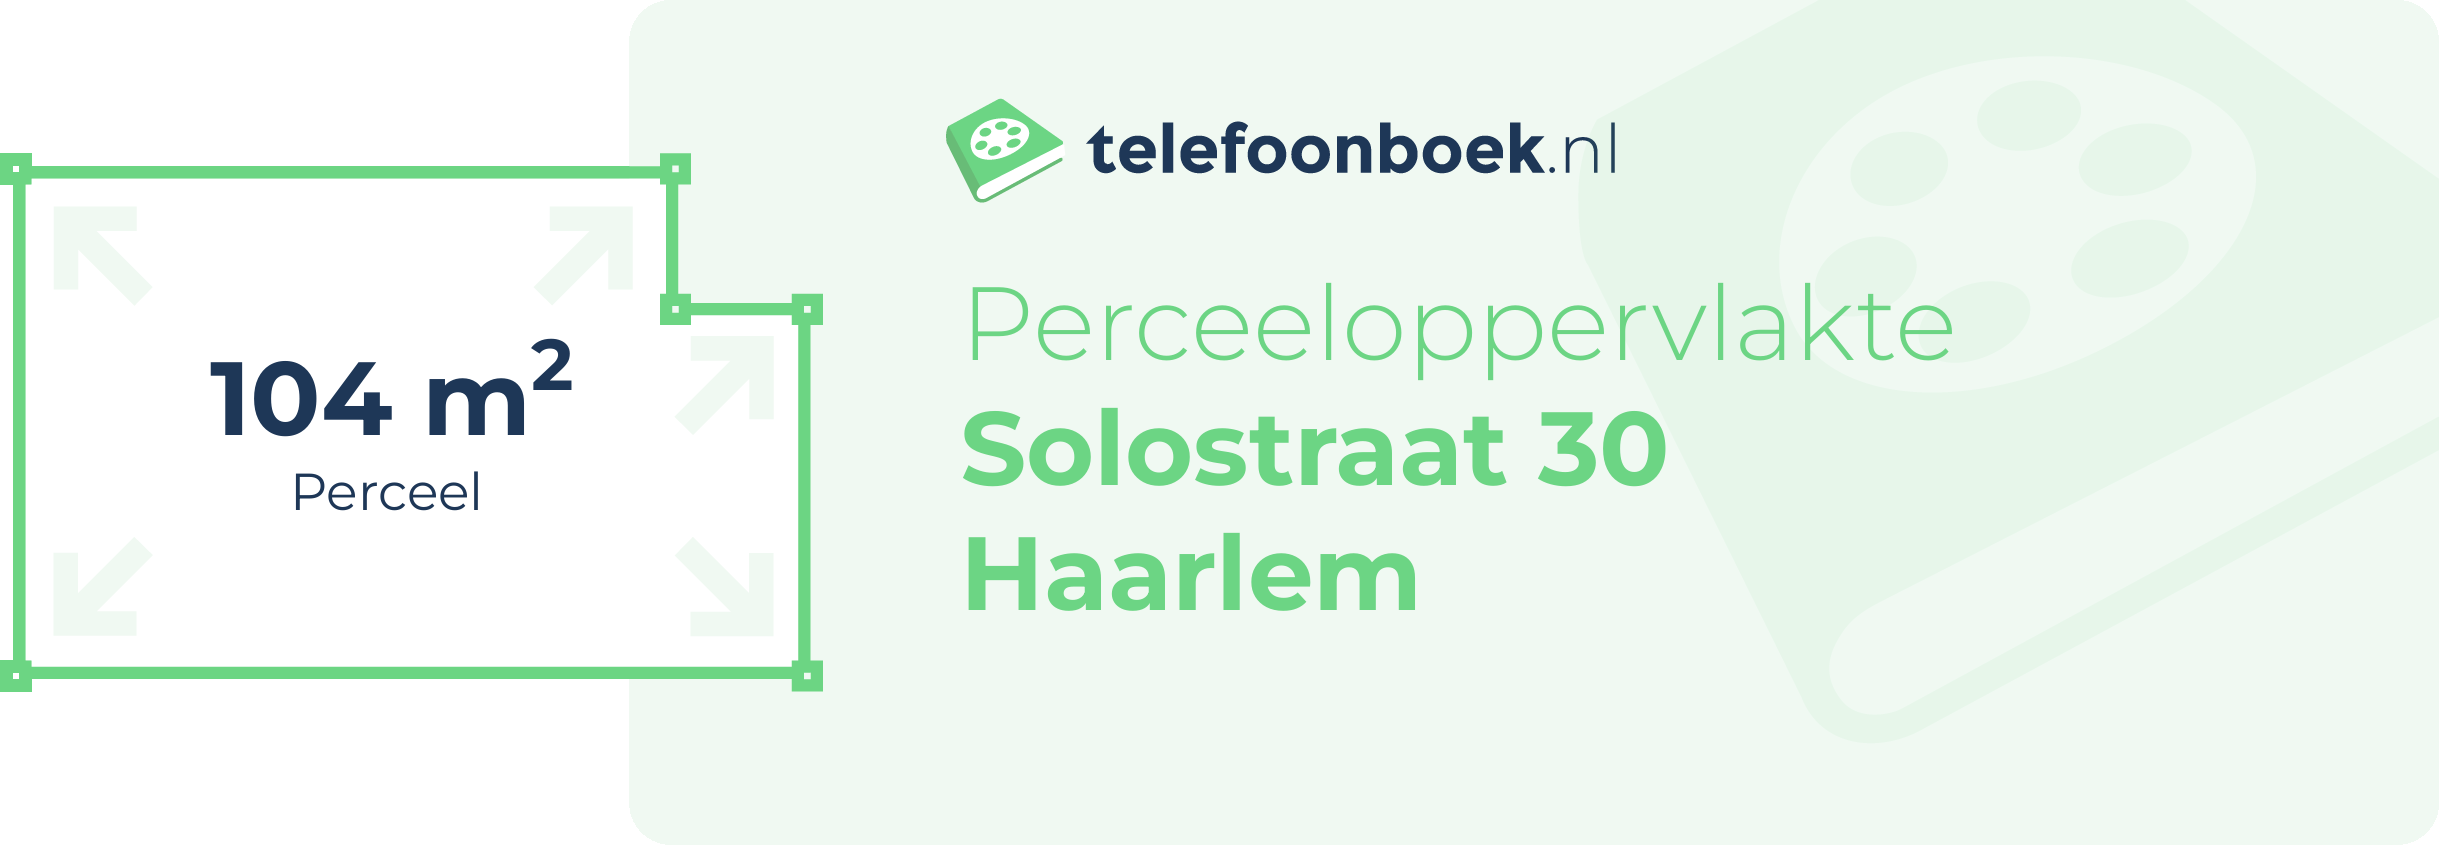 Perceeloppervlakte Solostraat 30 Haarlem